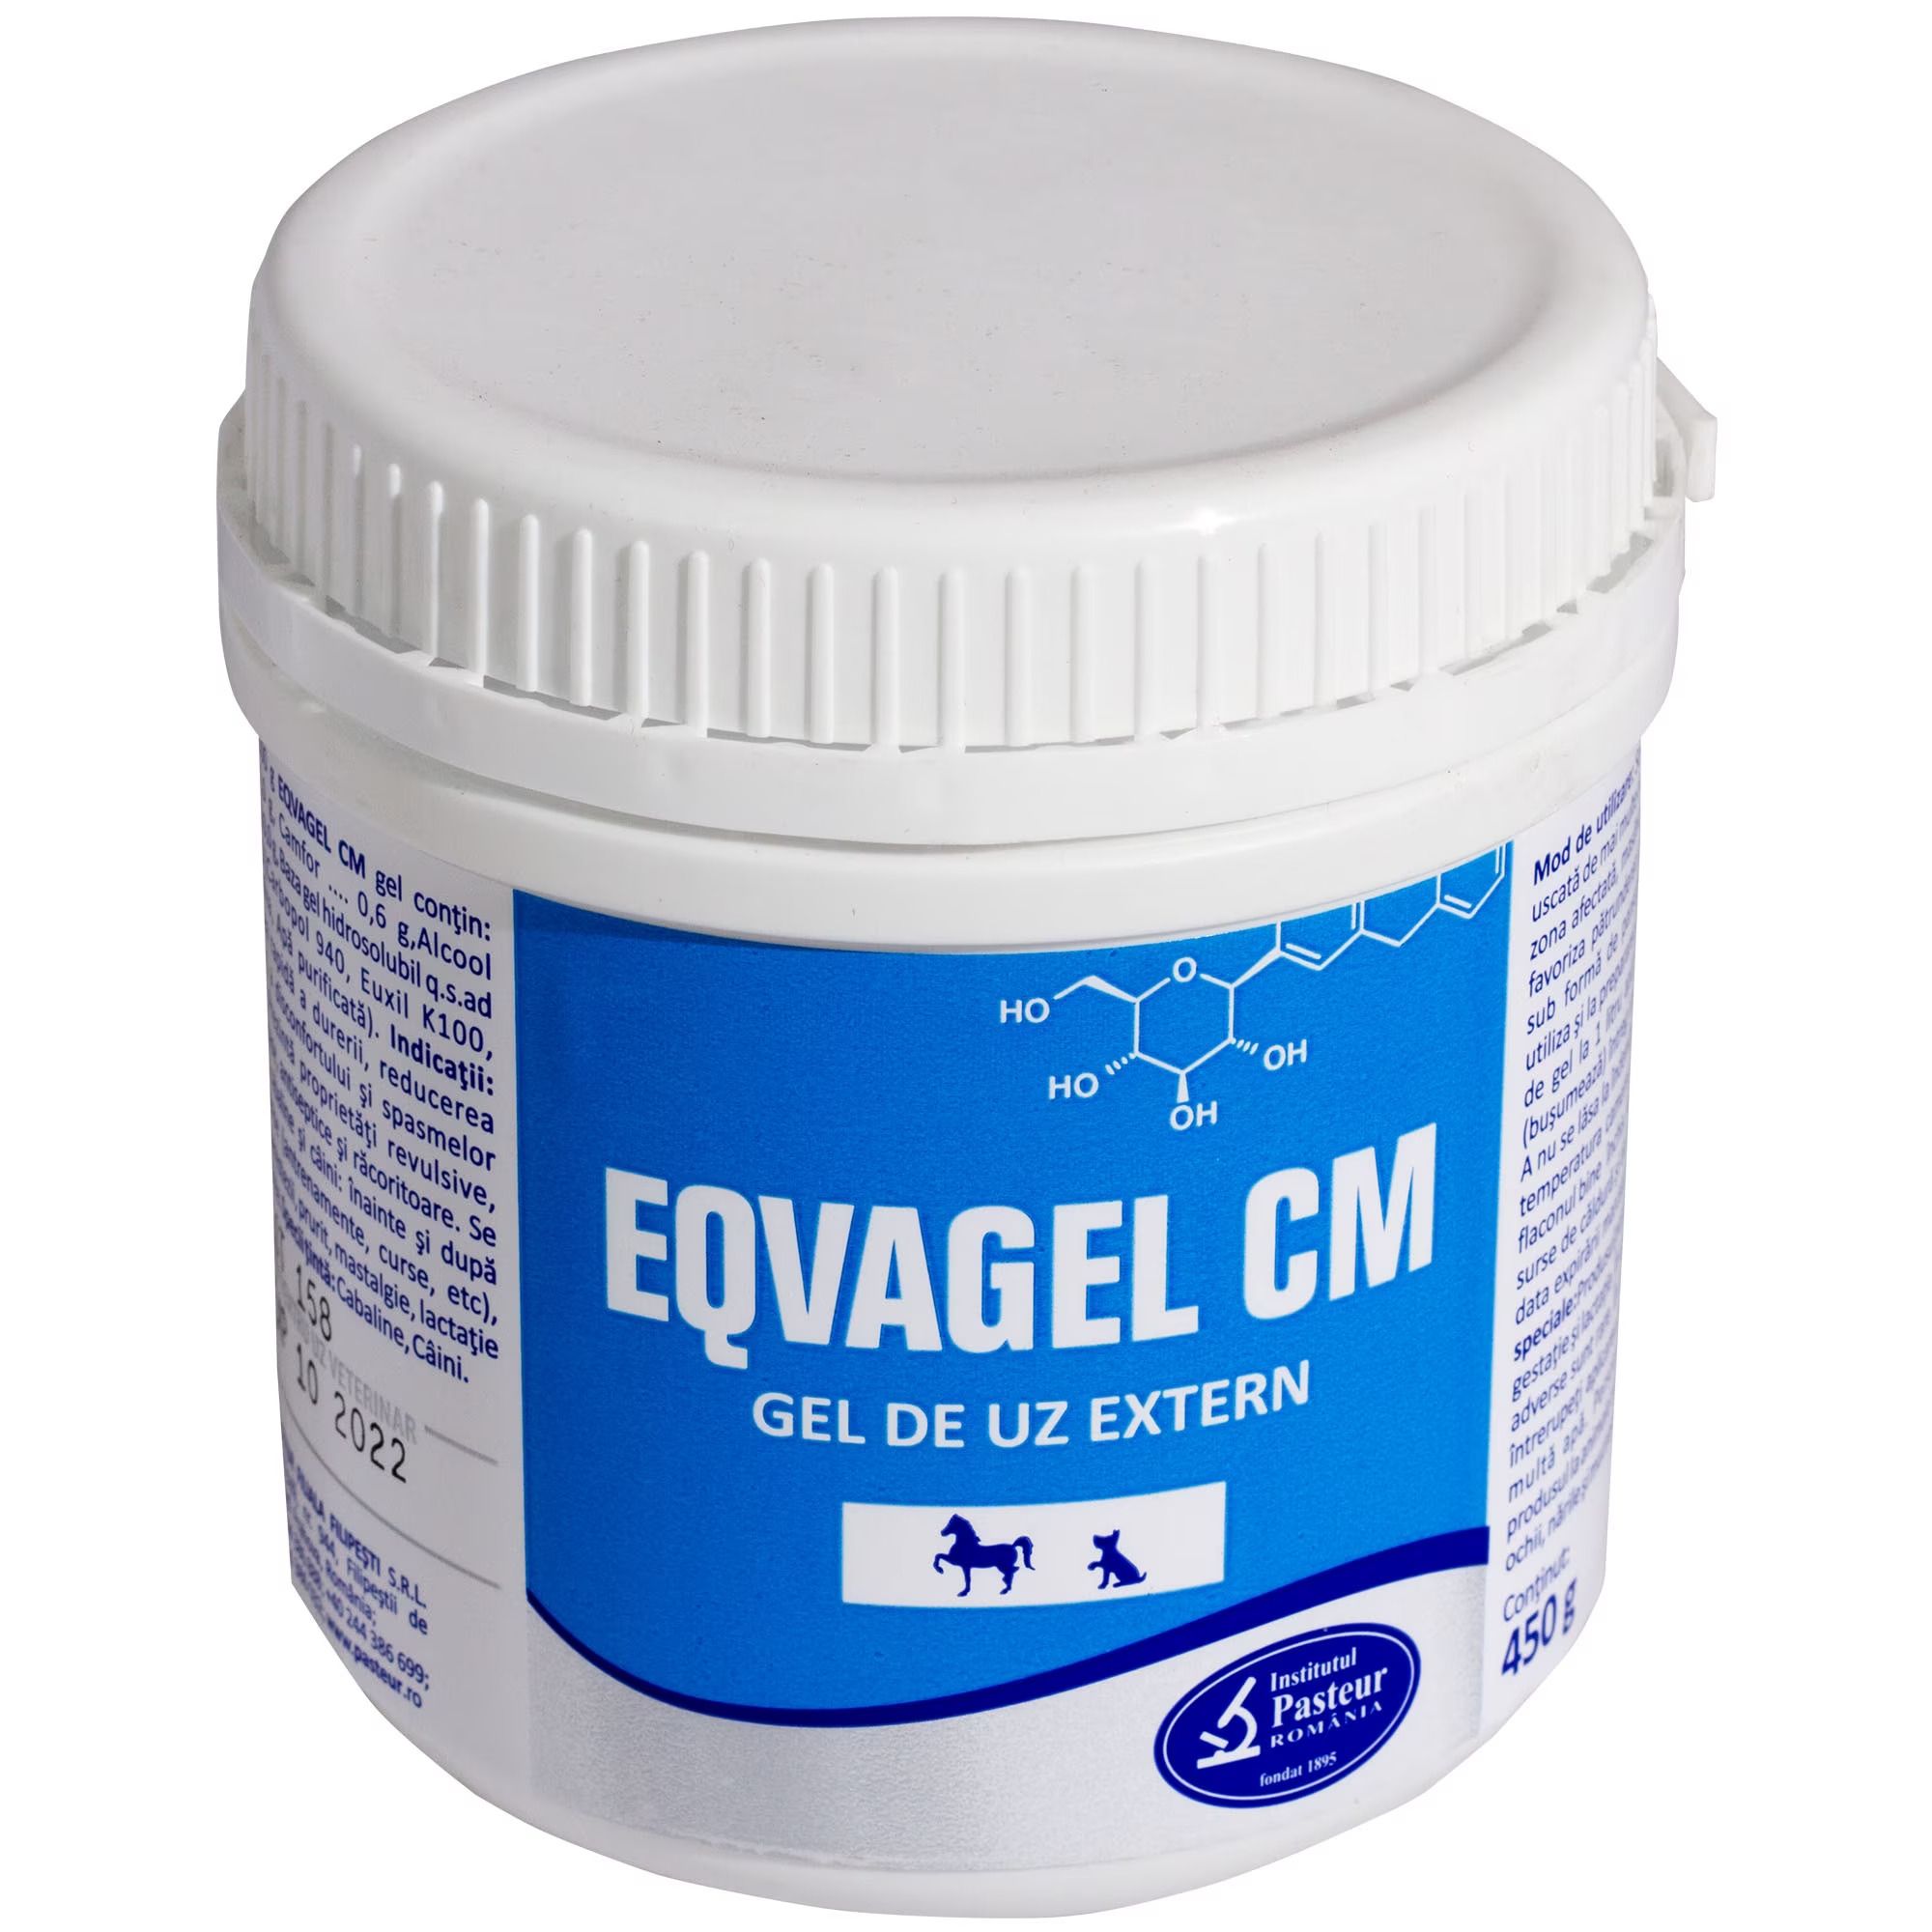 Eqvagel Cm, 450 g